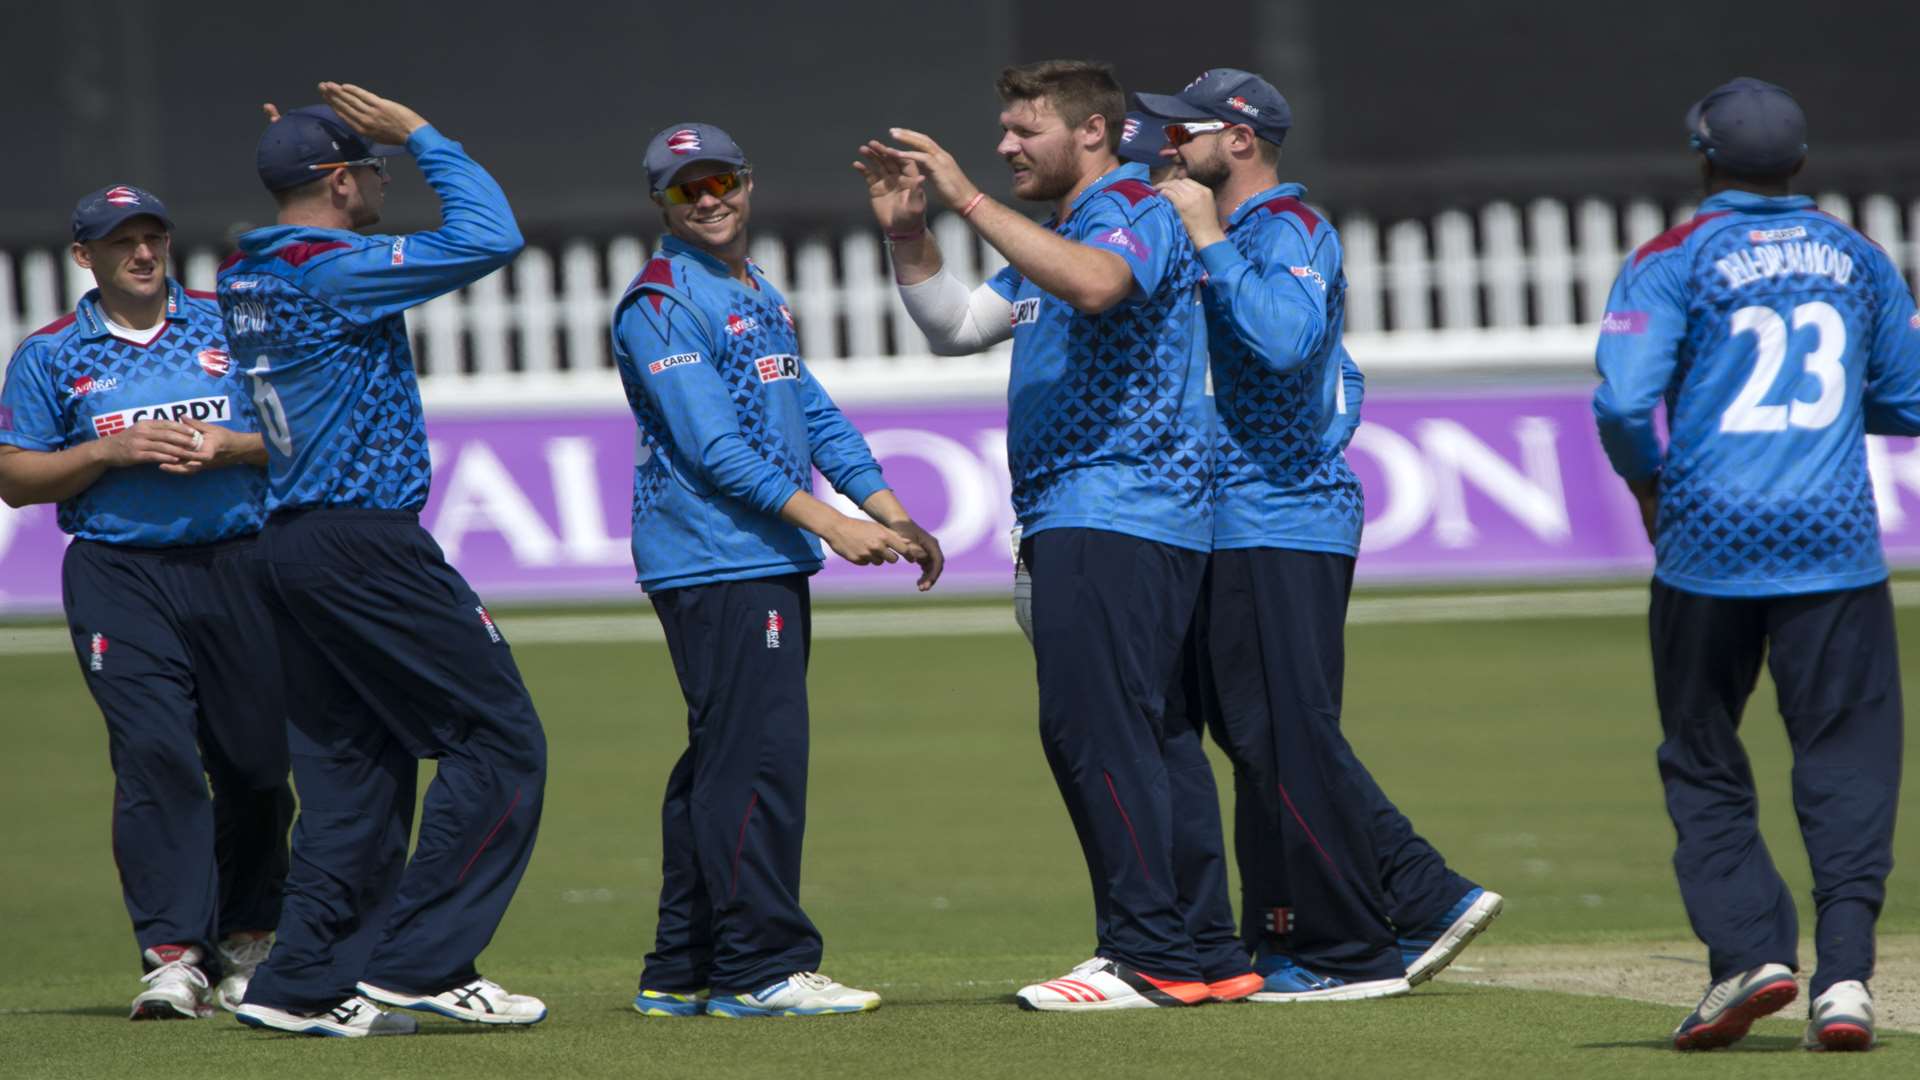 Matt Coles celebrates a wicket. Picture: Barry Goodwin